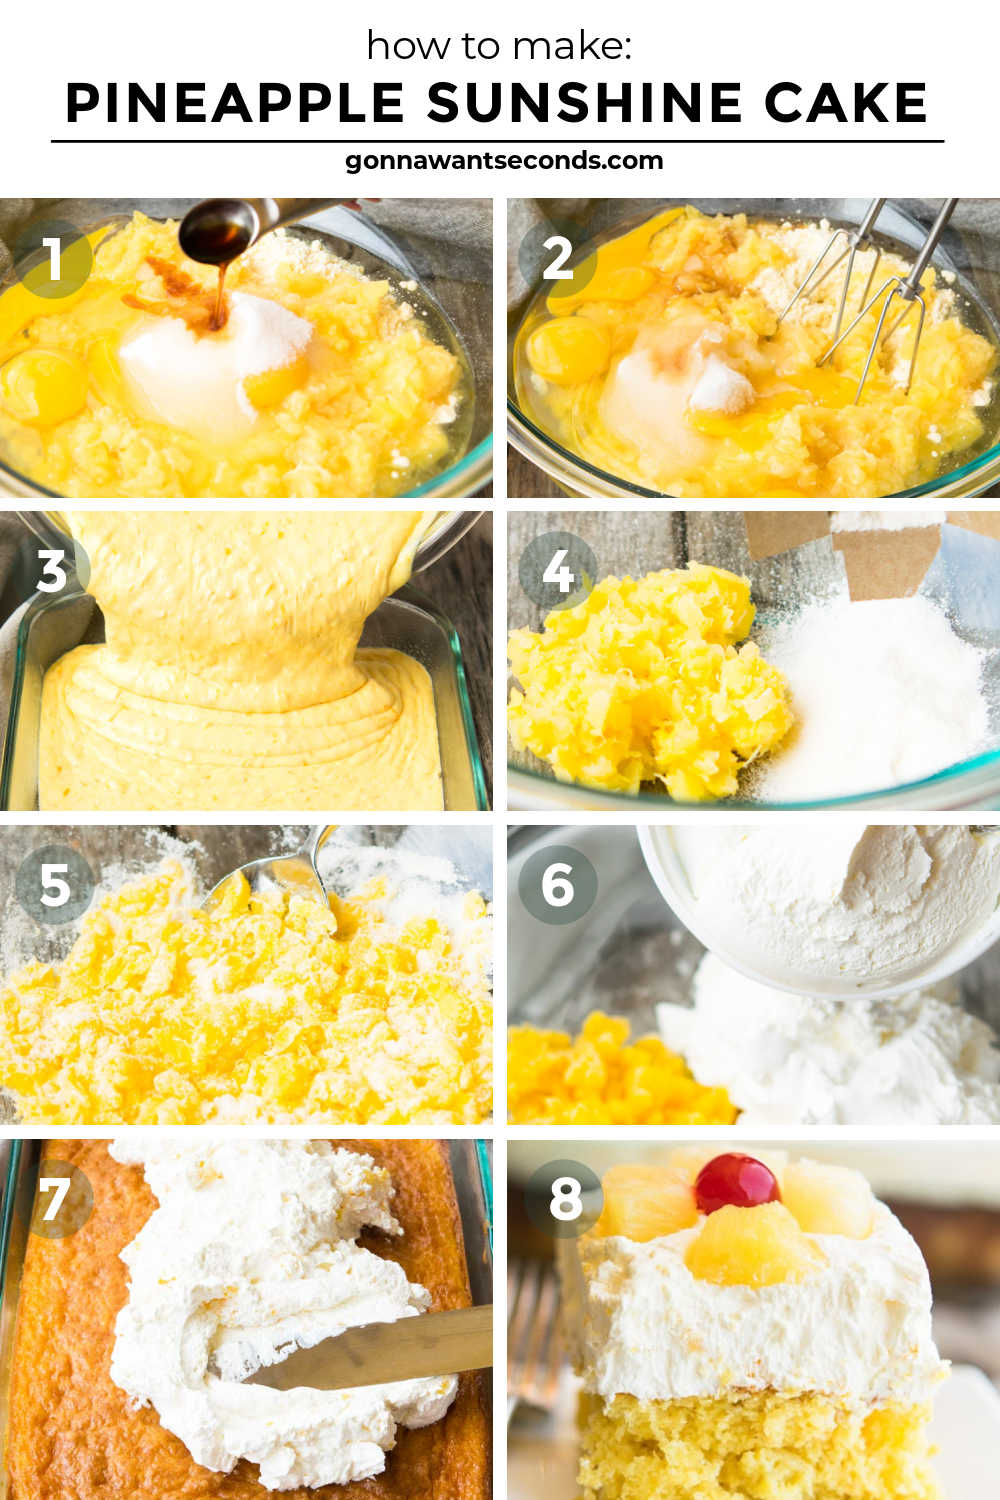 Step by step how to make pineapple sunshine cake